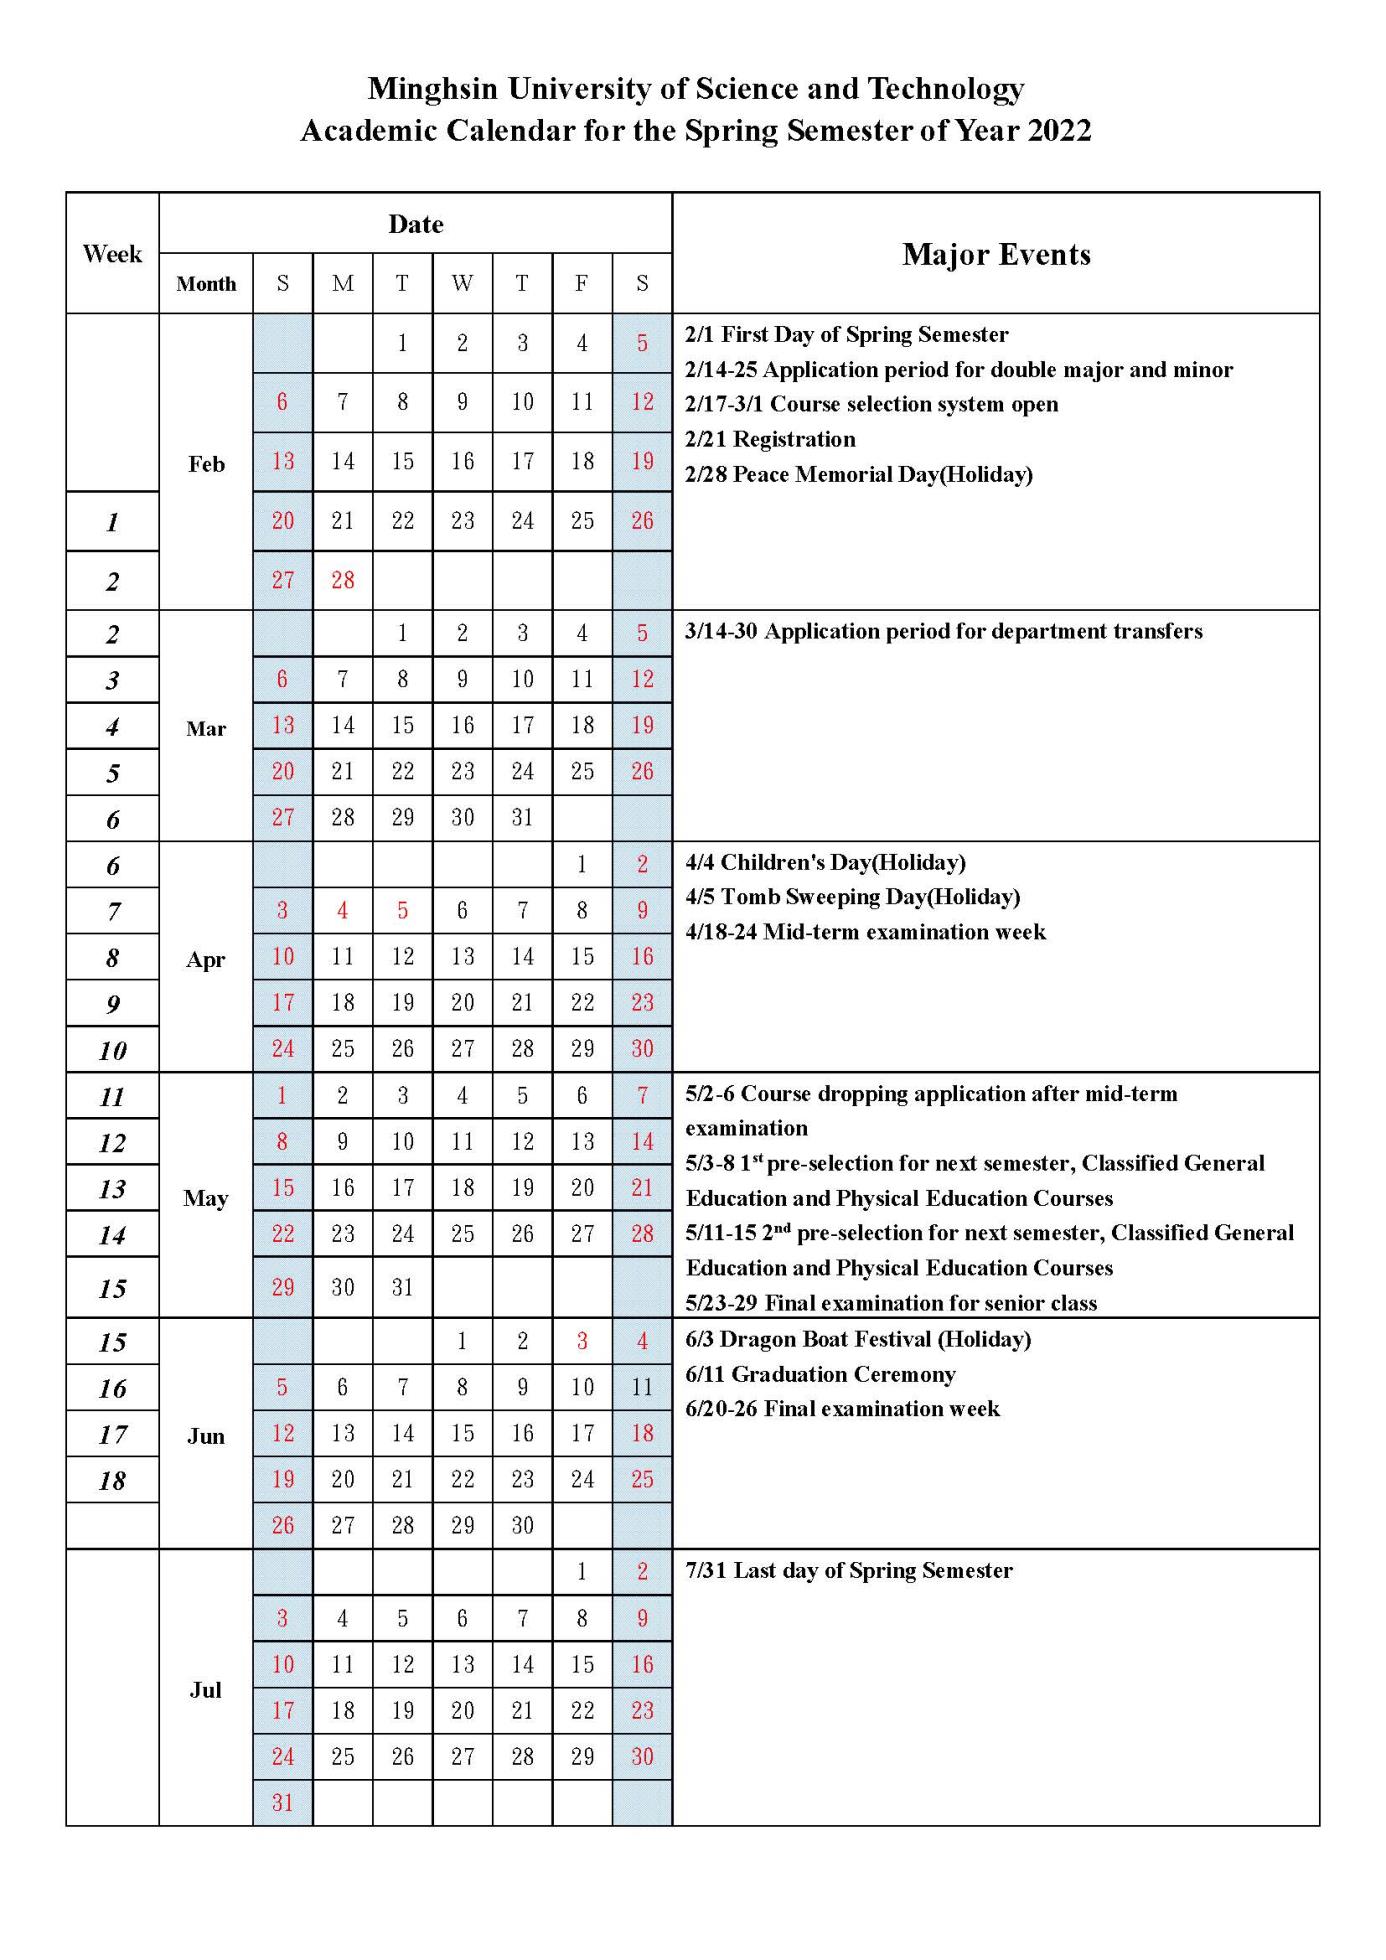 Academic Calendar for the Spring Semester of 2022_20220110102700